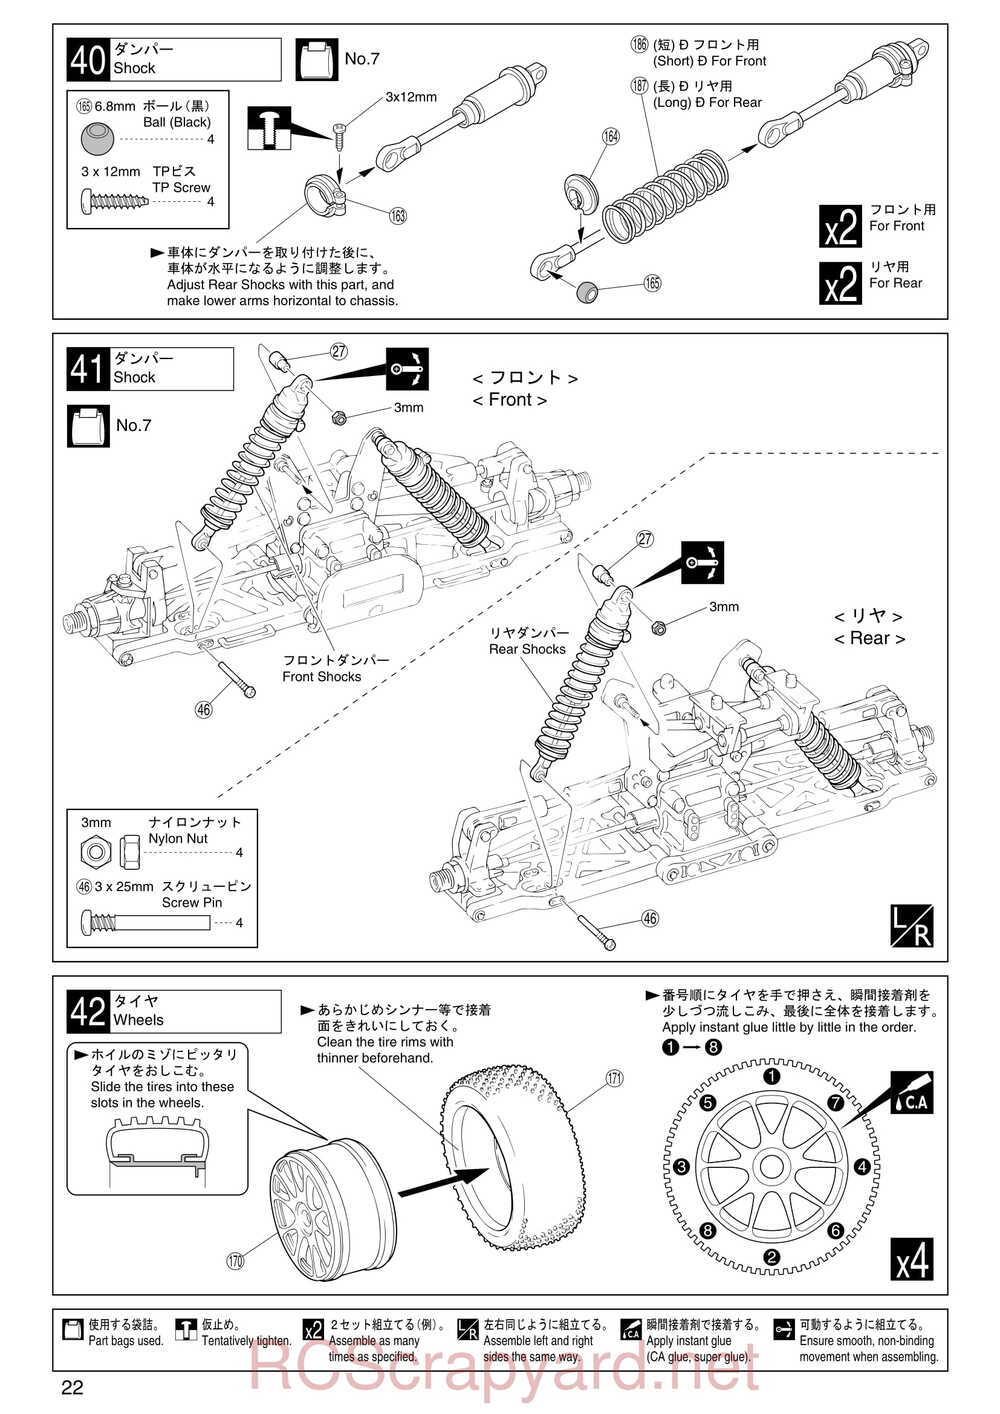 Kyosho - 31192 - Inferno-MP-7-5 Sports - Manual - Page 22